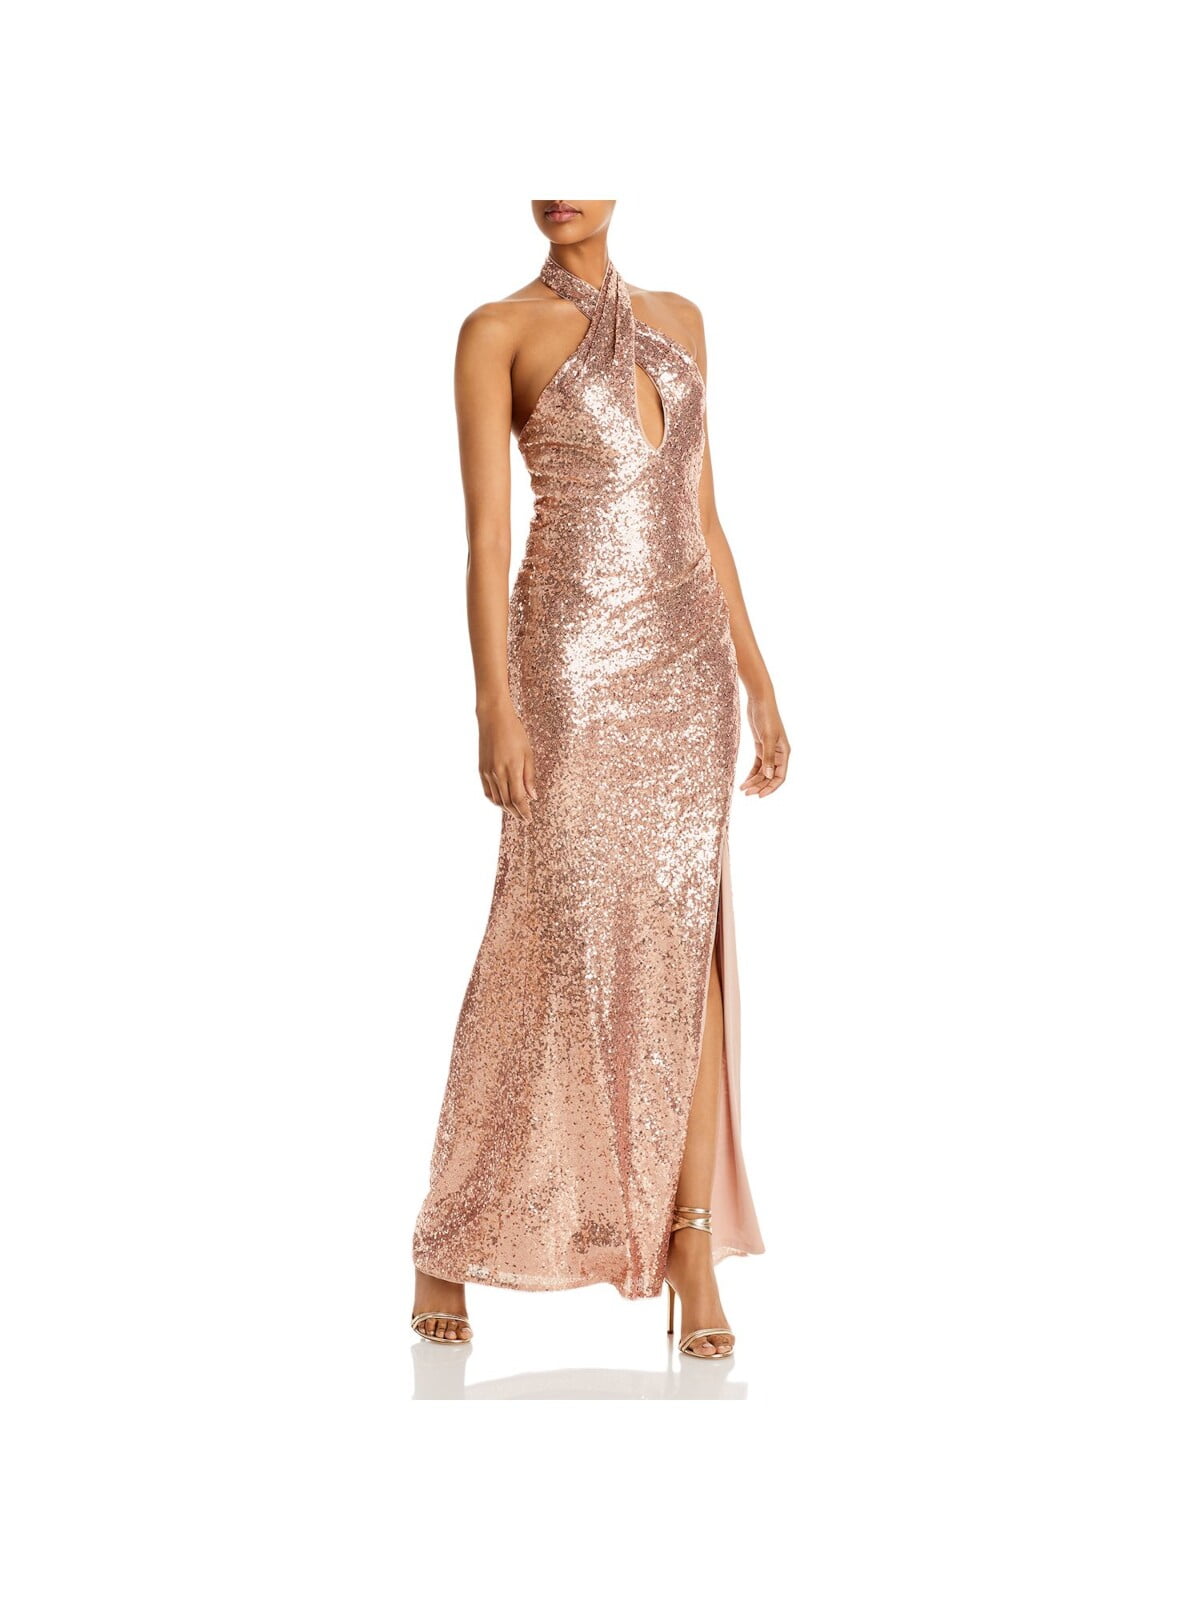 AQUA FORMAL Womens Pink Sequined Slitted Lined Sleeveless Halter Full Length Formal Sheath Dress L c9bab367 d700 440a 8175 fcc9dc975188.735e1b8461cdd491dba8dc5e99bbbfa5